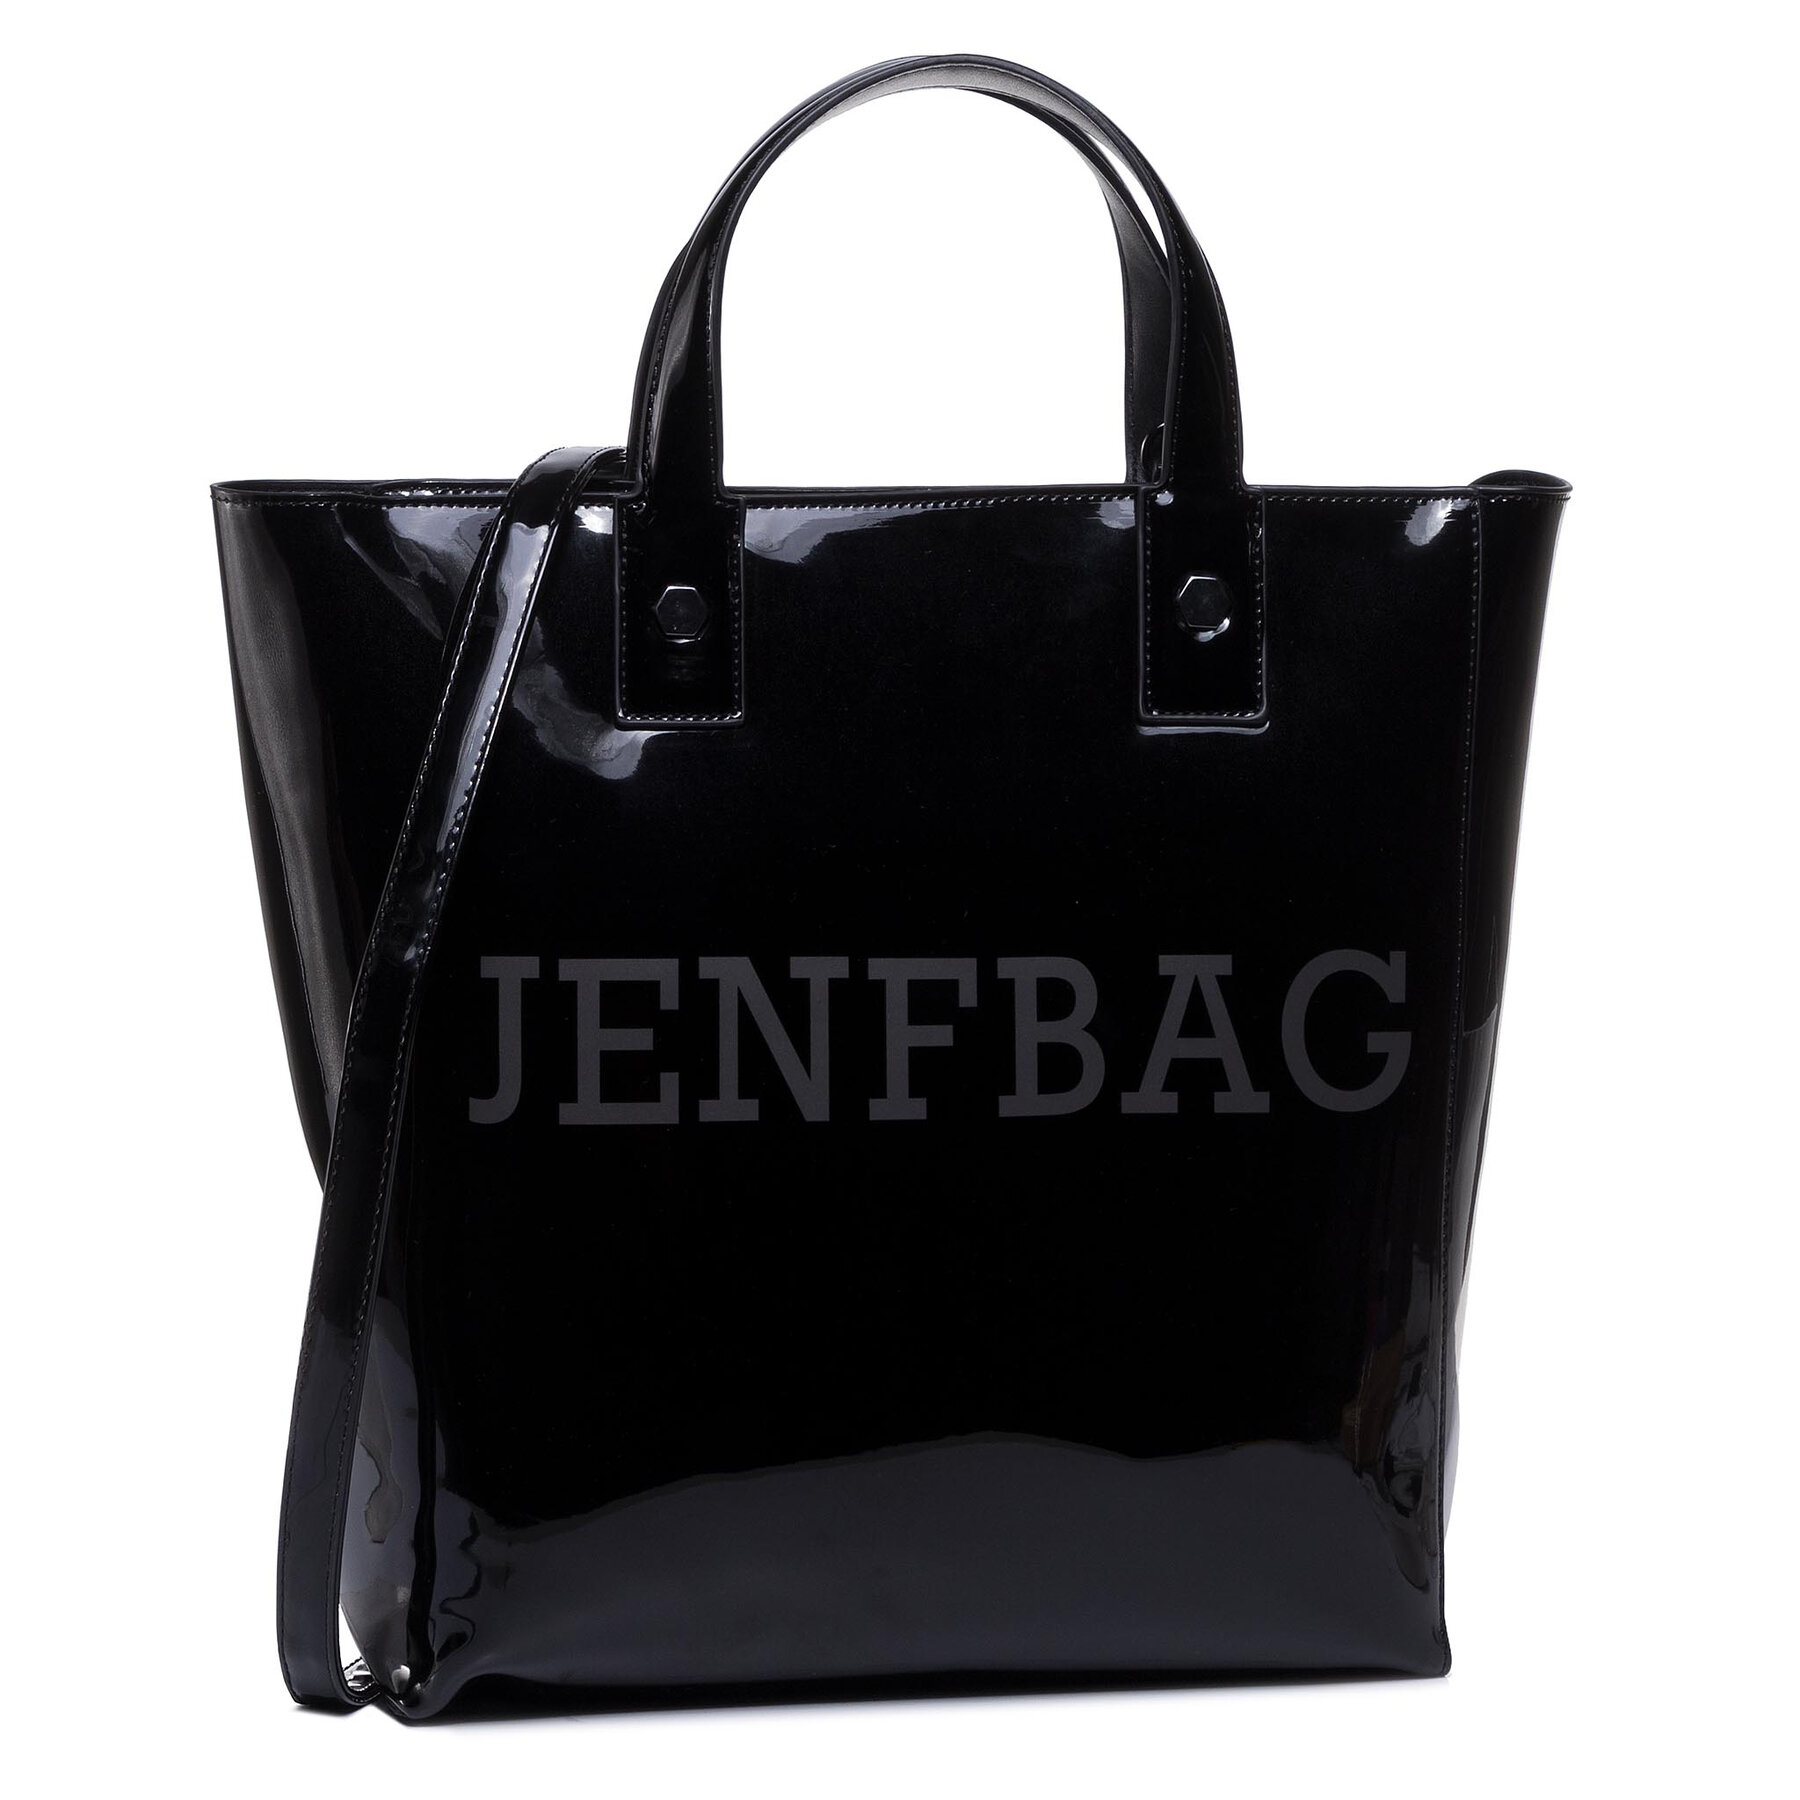 Дамска чанта Jenny Fairy